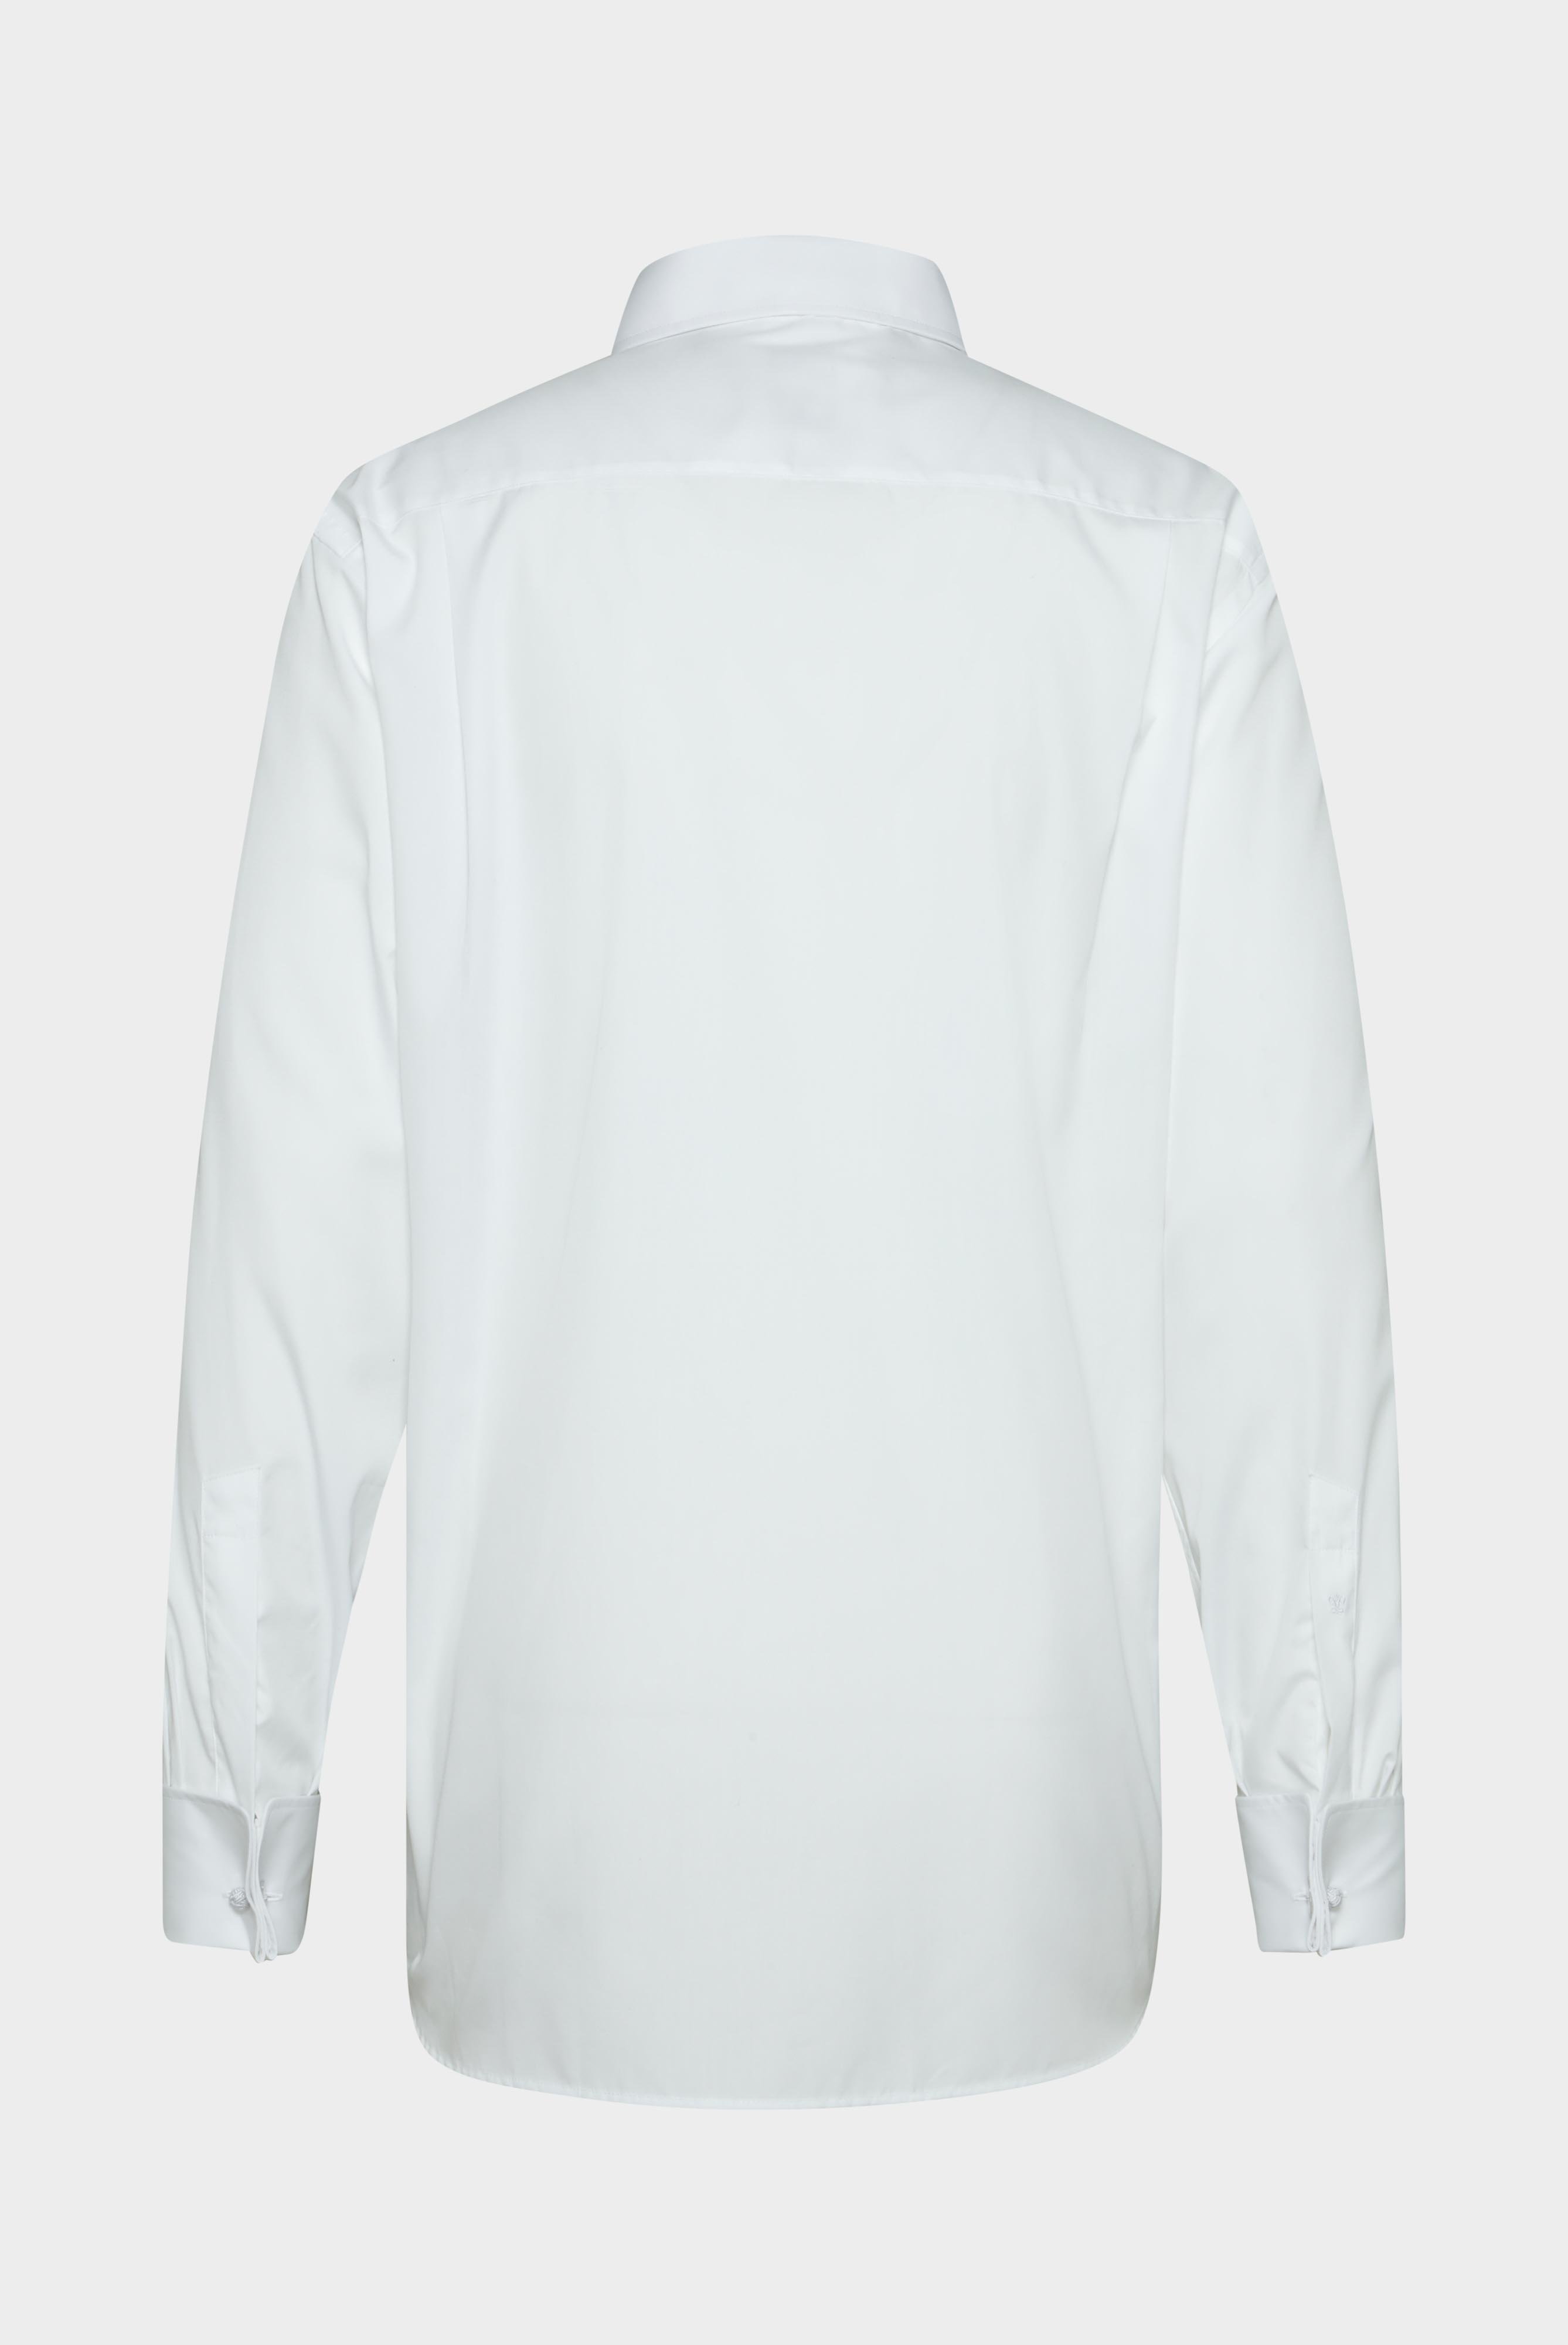 Business Shirts+Poplin Shirt Comfort Fit+20.2044.AV.130648.000.37